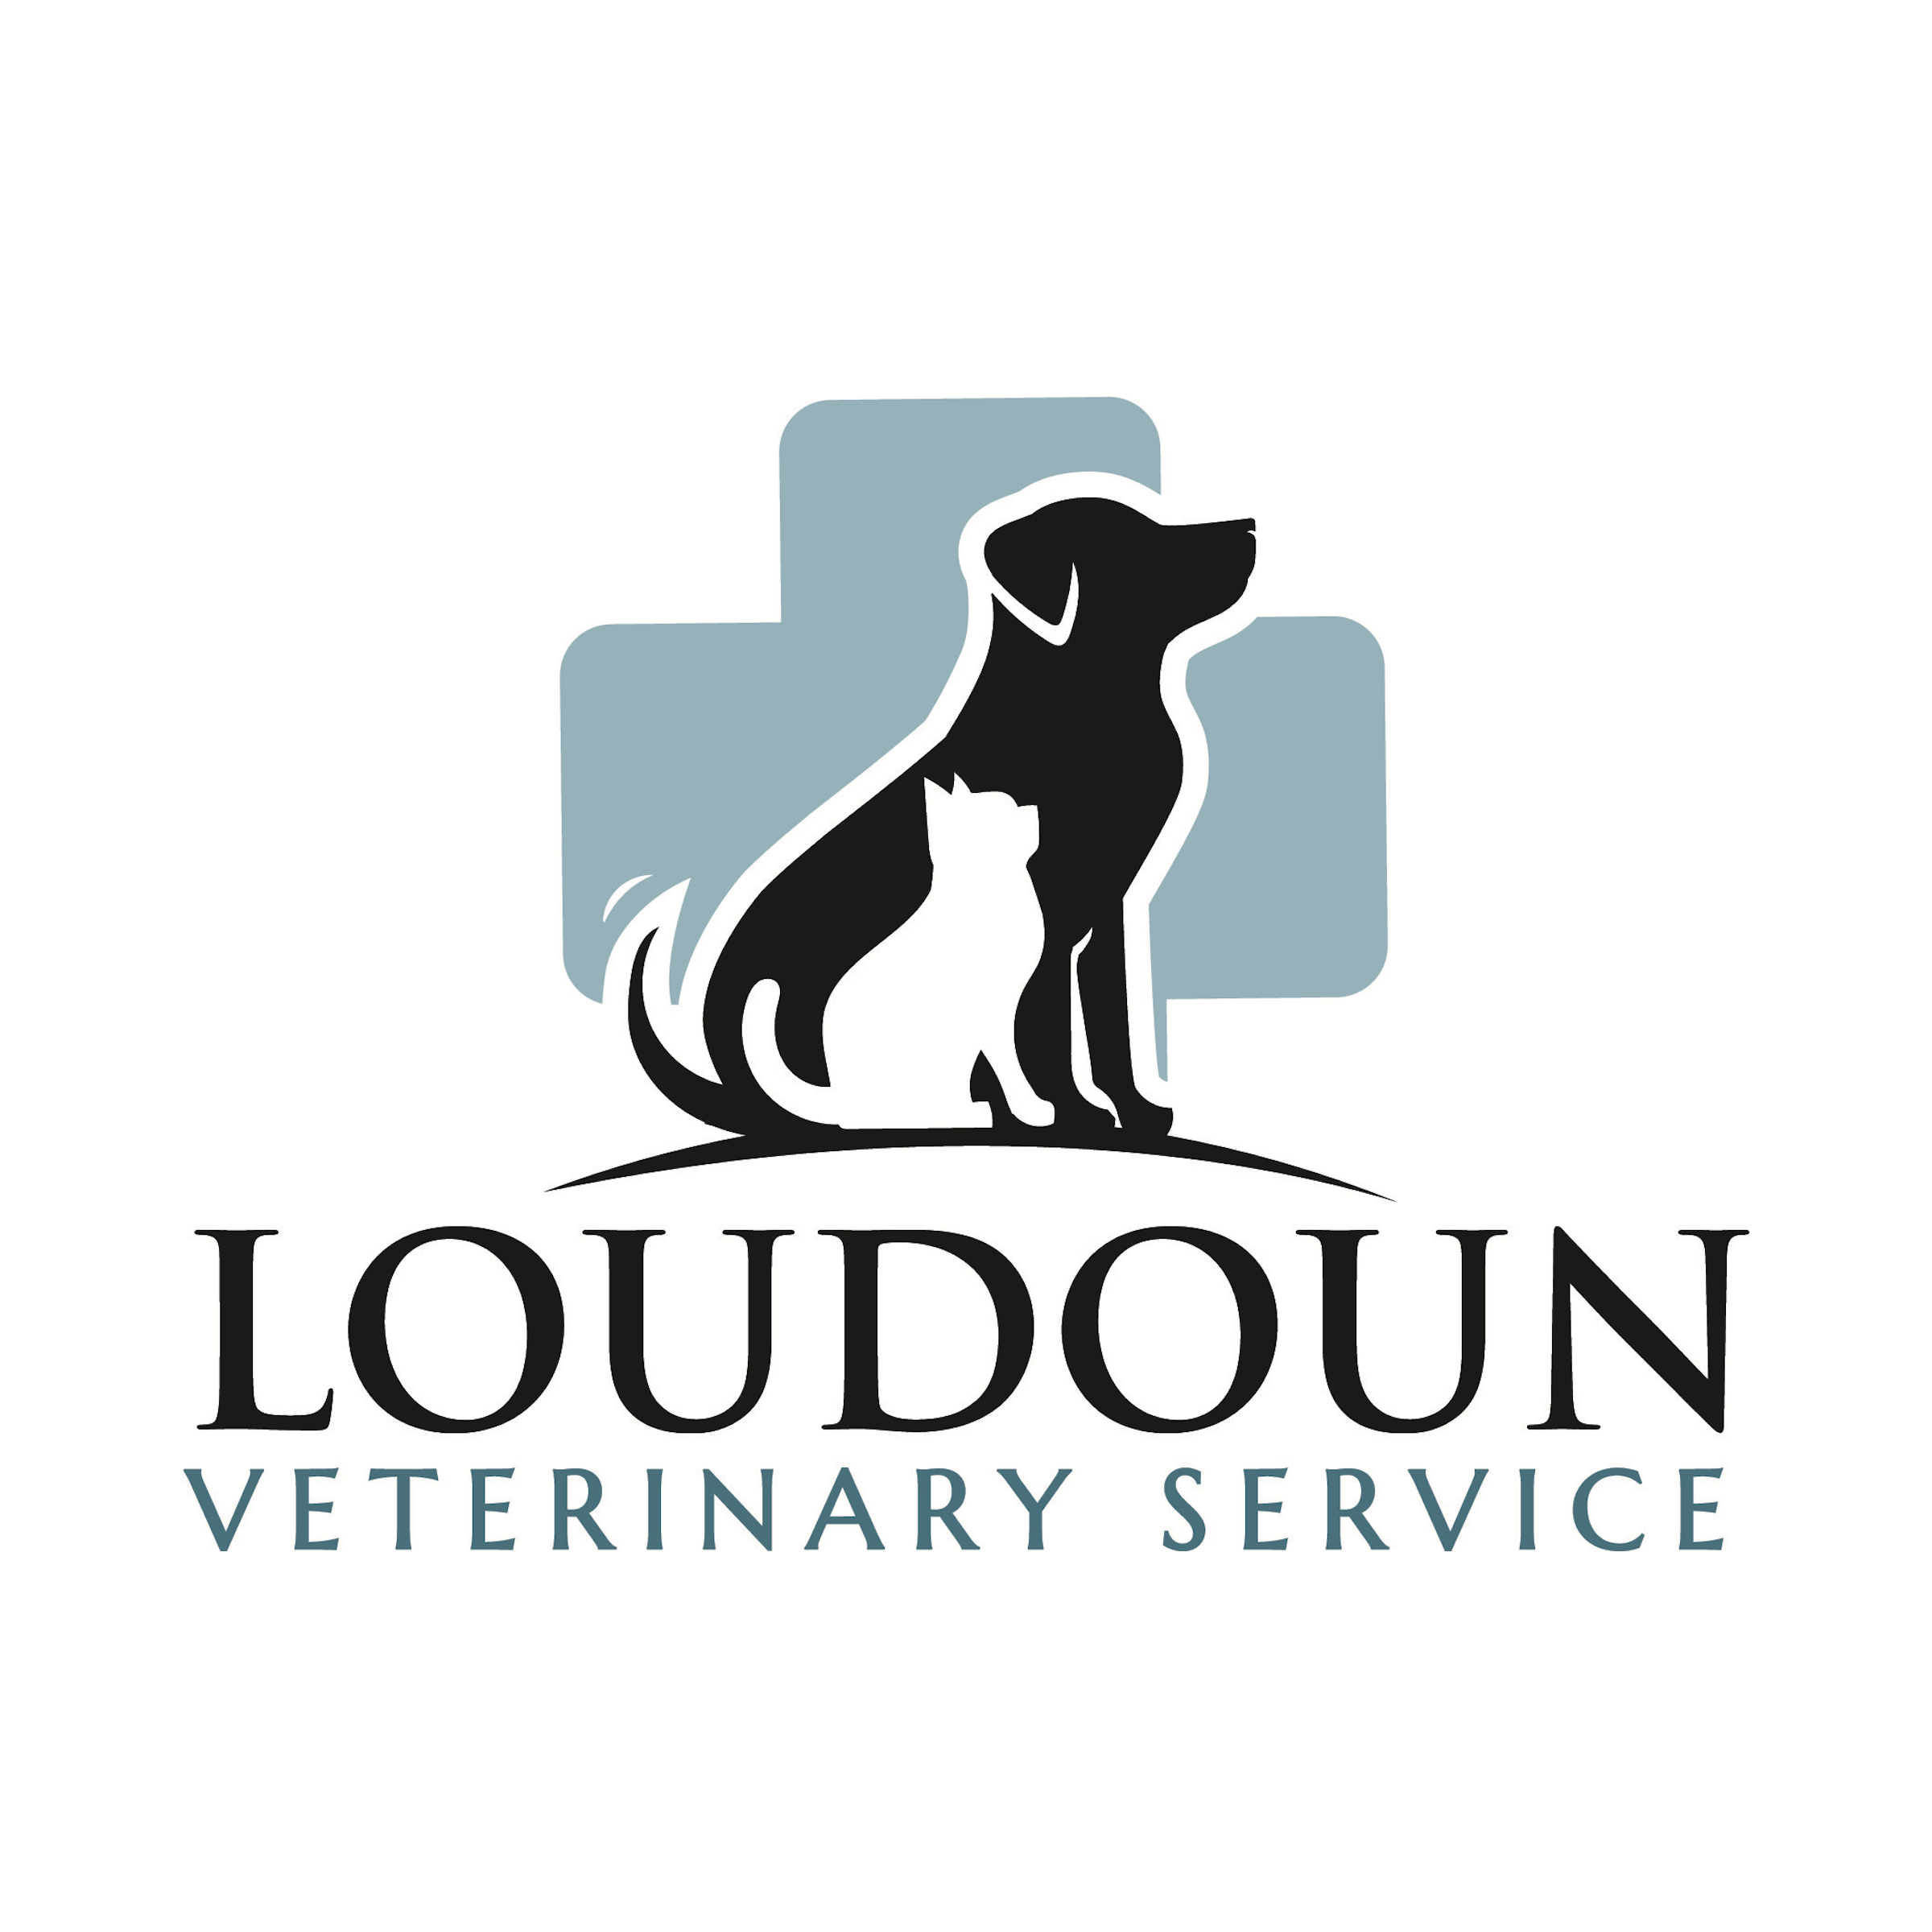 Loudoun Veterinary Service, Inc